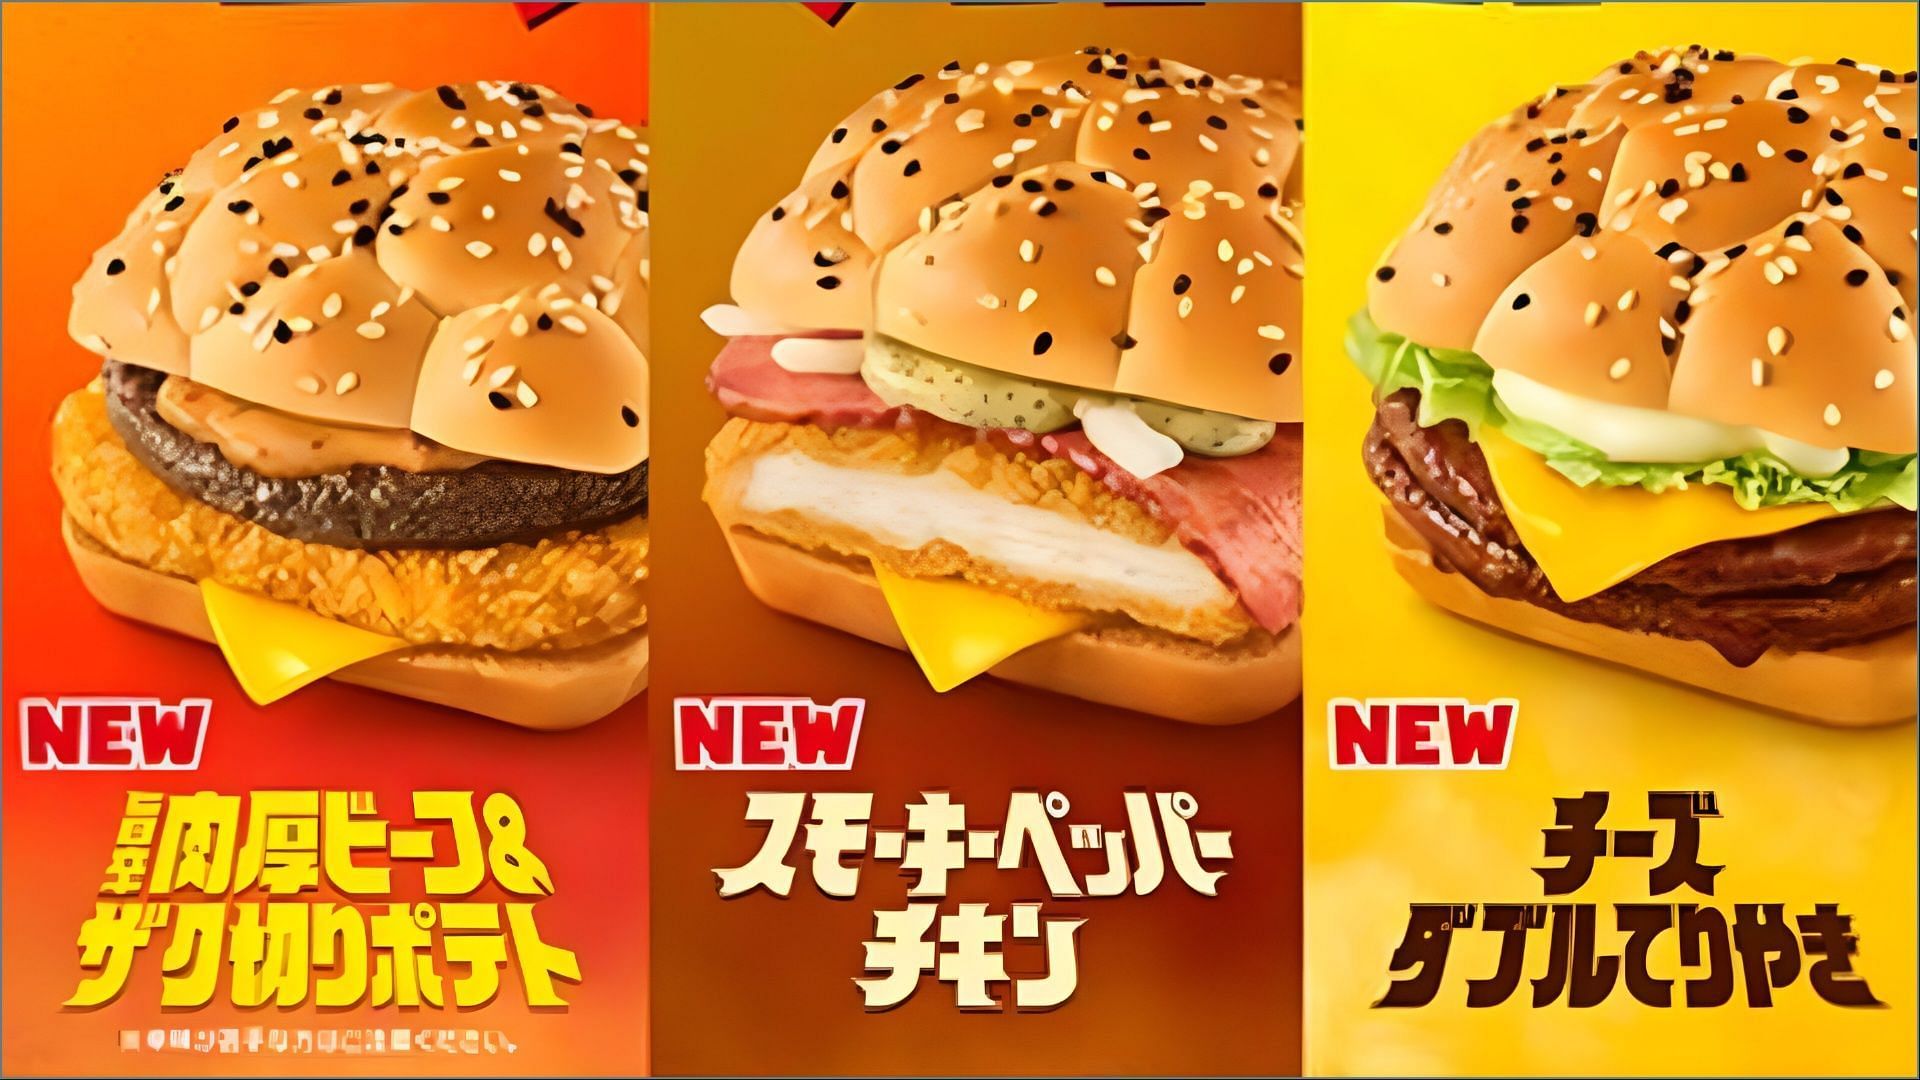 The new Godzilla burgers start at over &yen;470 (Image via McD Japan)